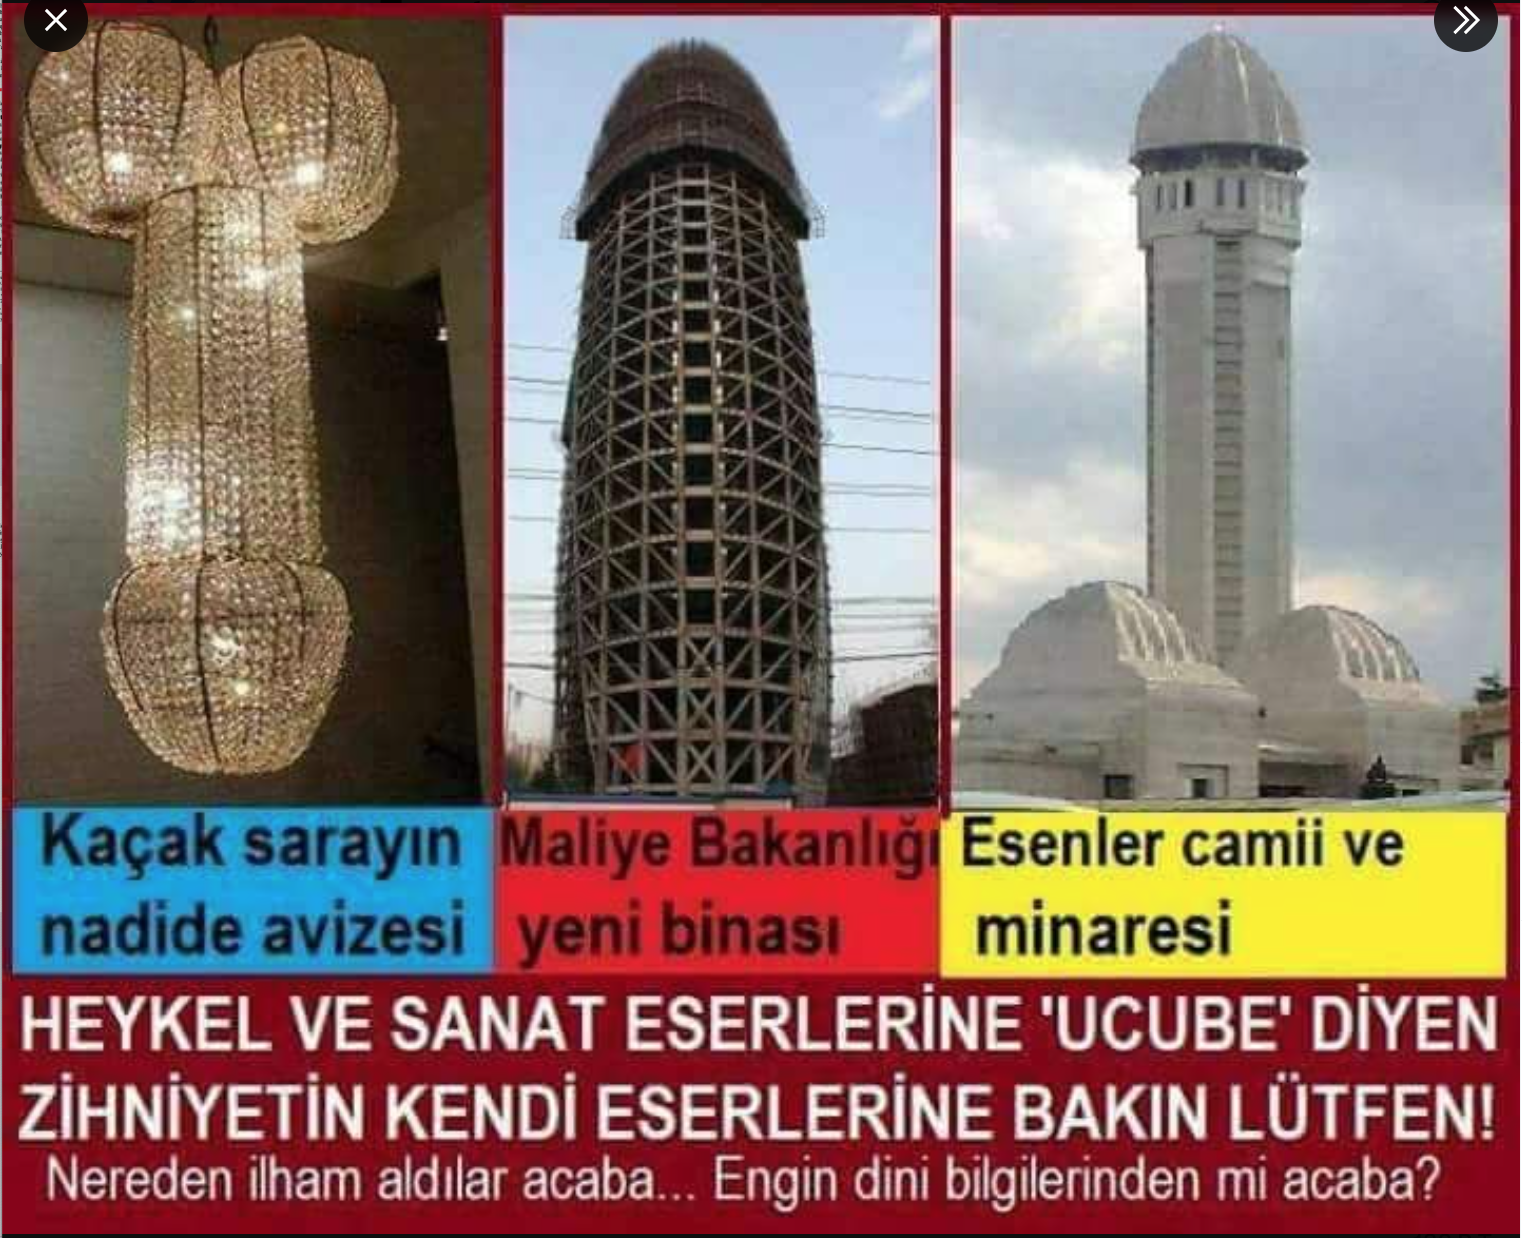 DİN İSLAMDA "TENASÜL" KÜLTÜR SANATI..